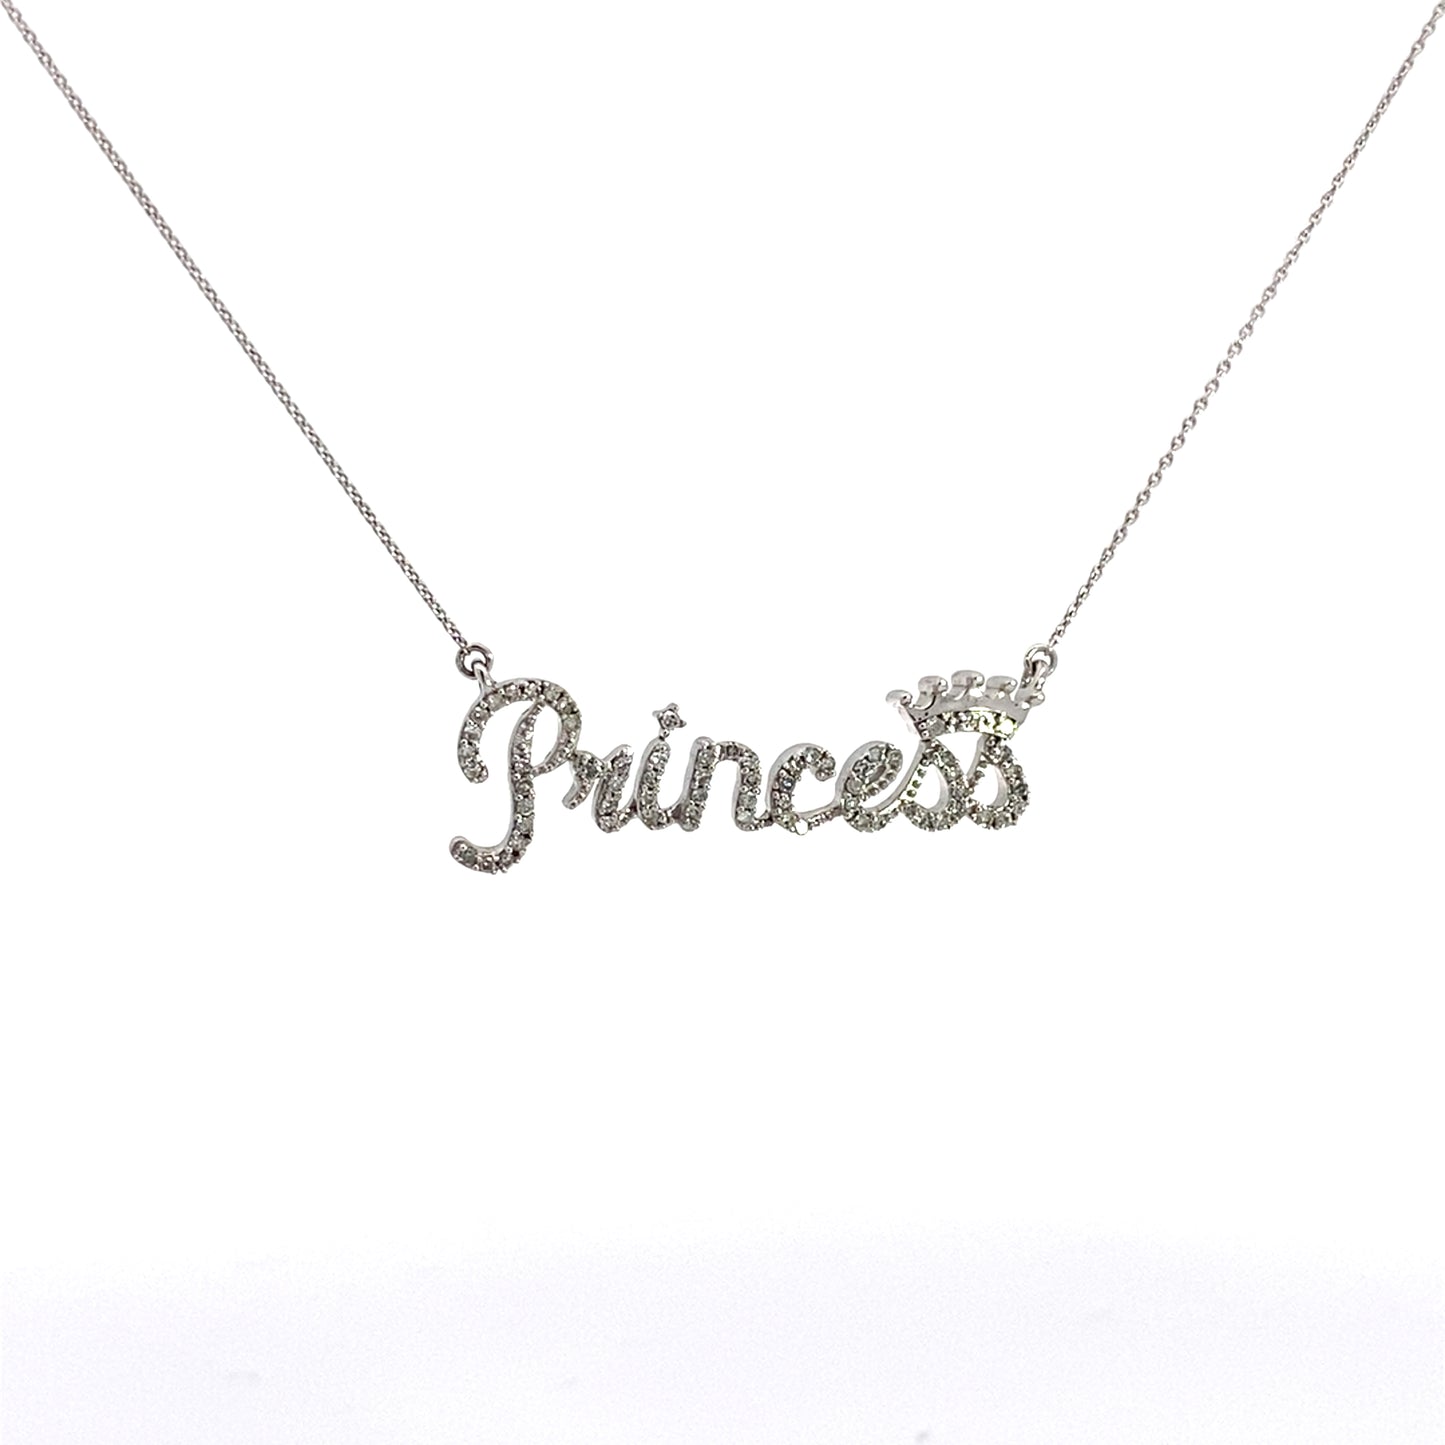 10K White Gold Diamond "Princess" Necklace 19In 1.8Dwt